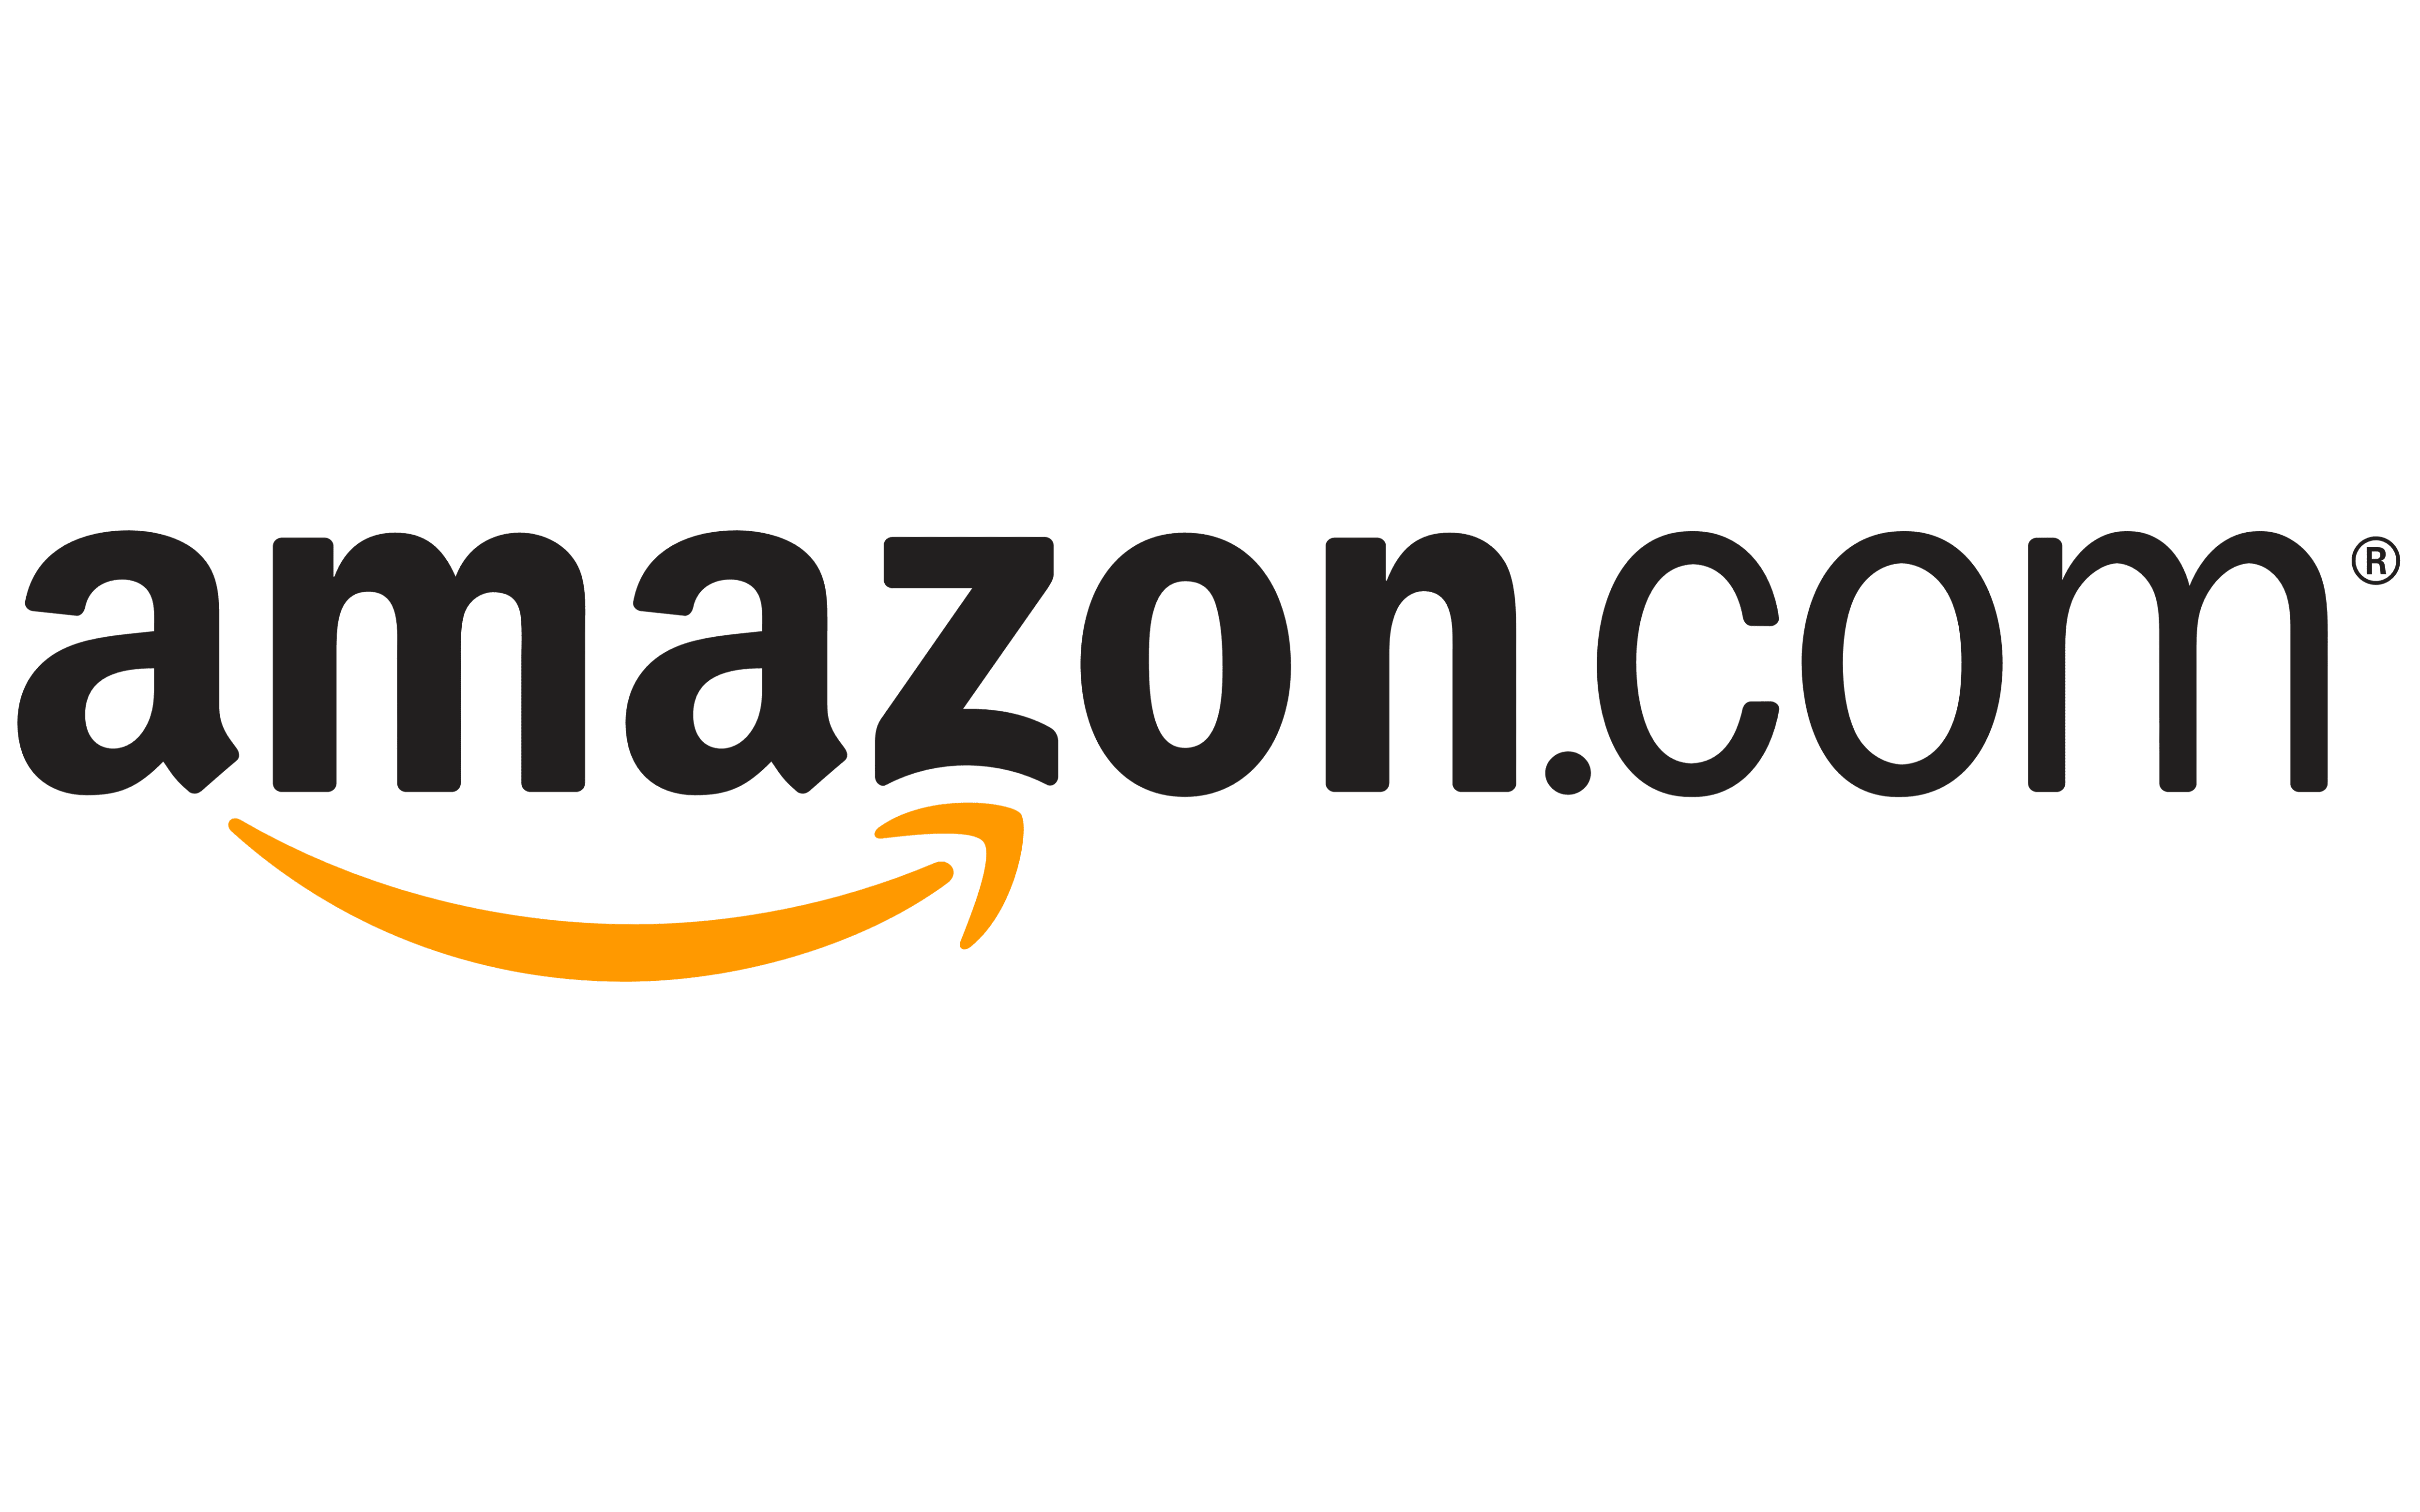 Amazon.com-i puhverserver